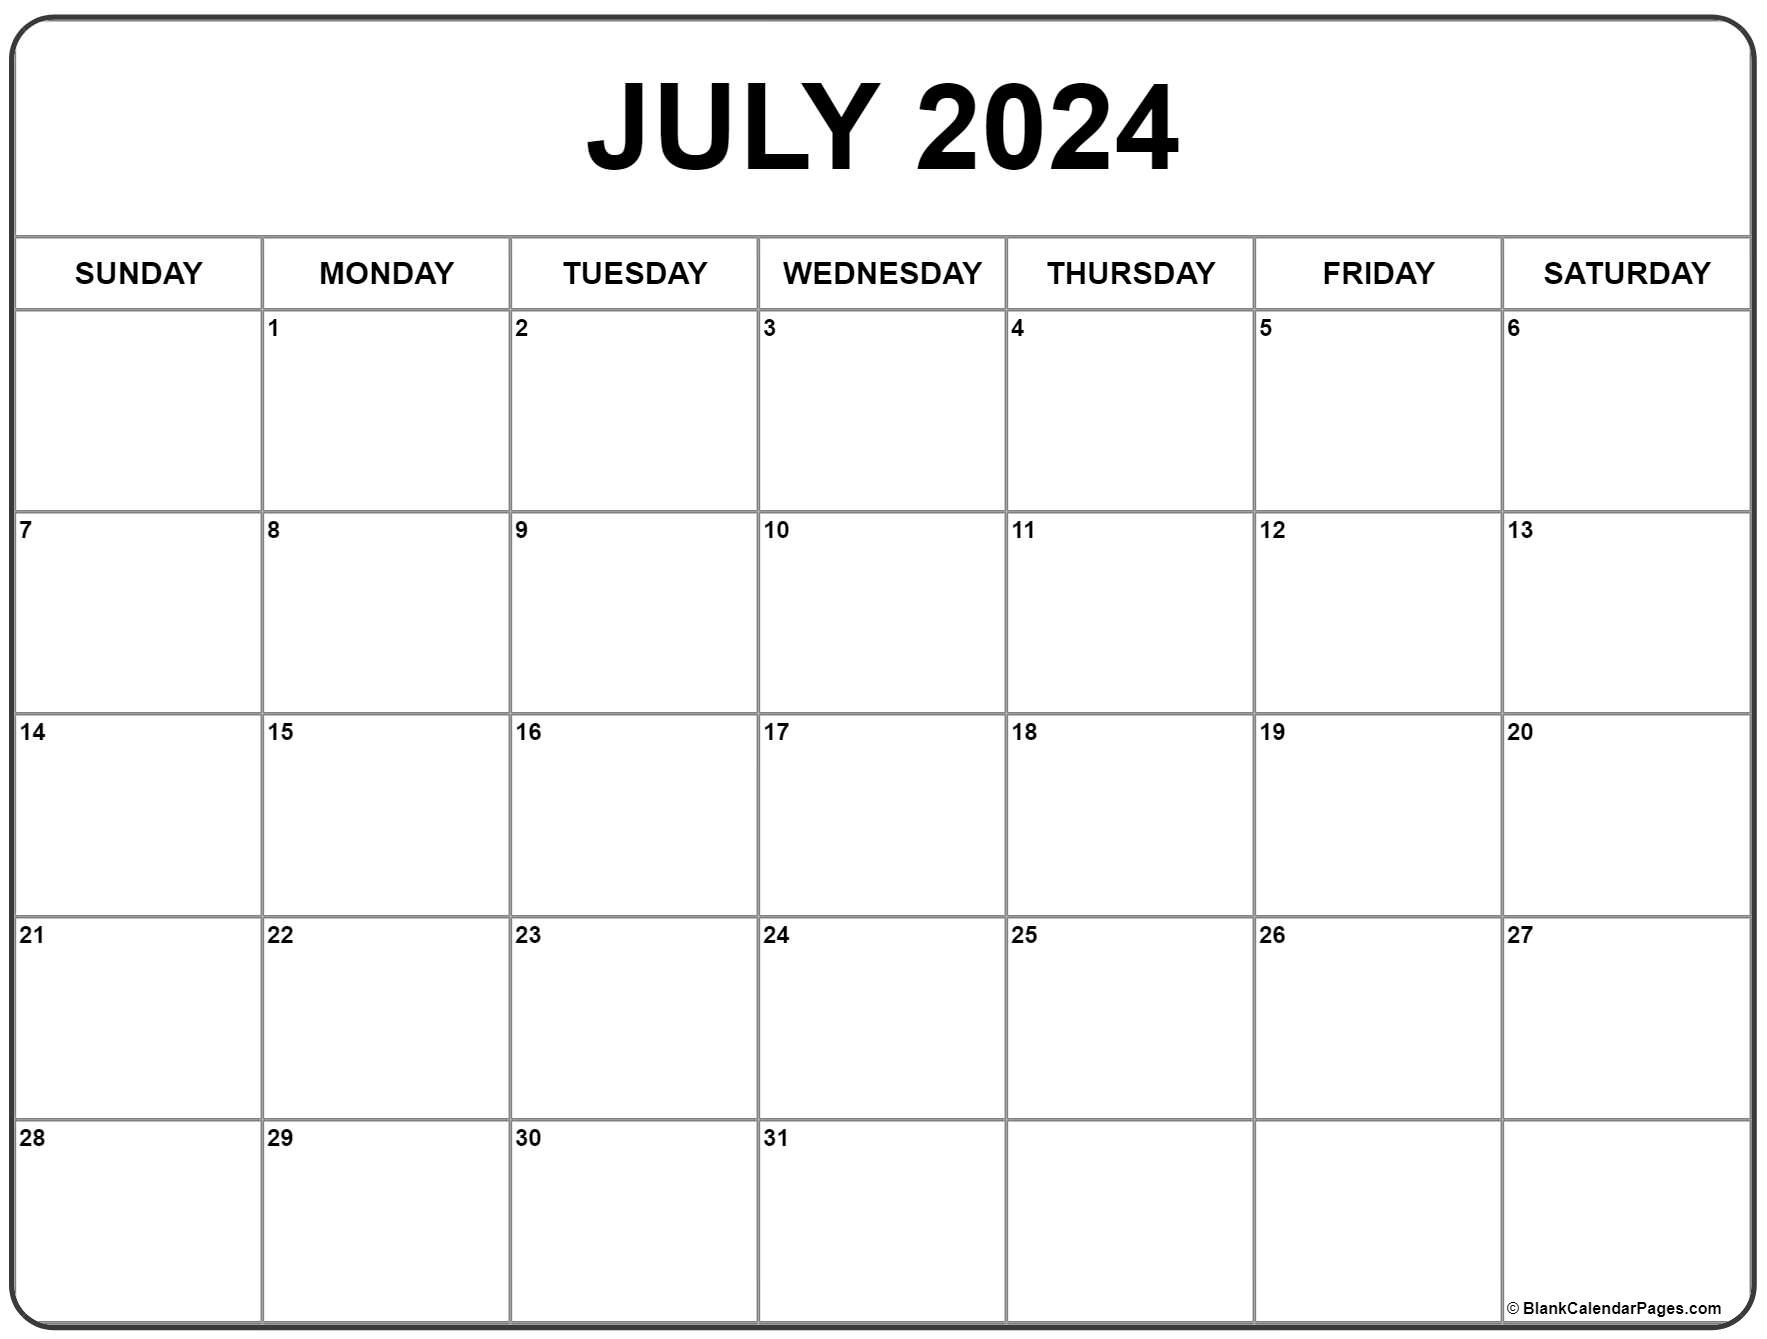 July 2024 Calendar | Free Printable Calendar for Printable Monthly Calendar 2024 July